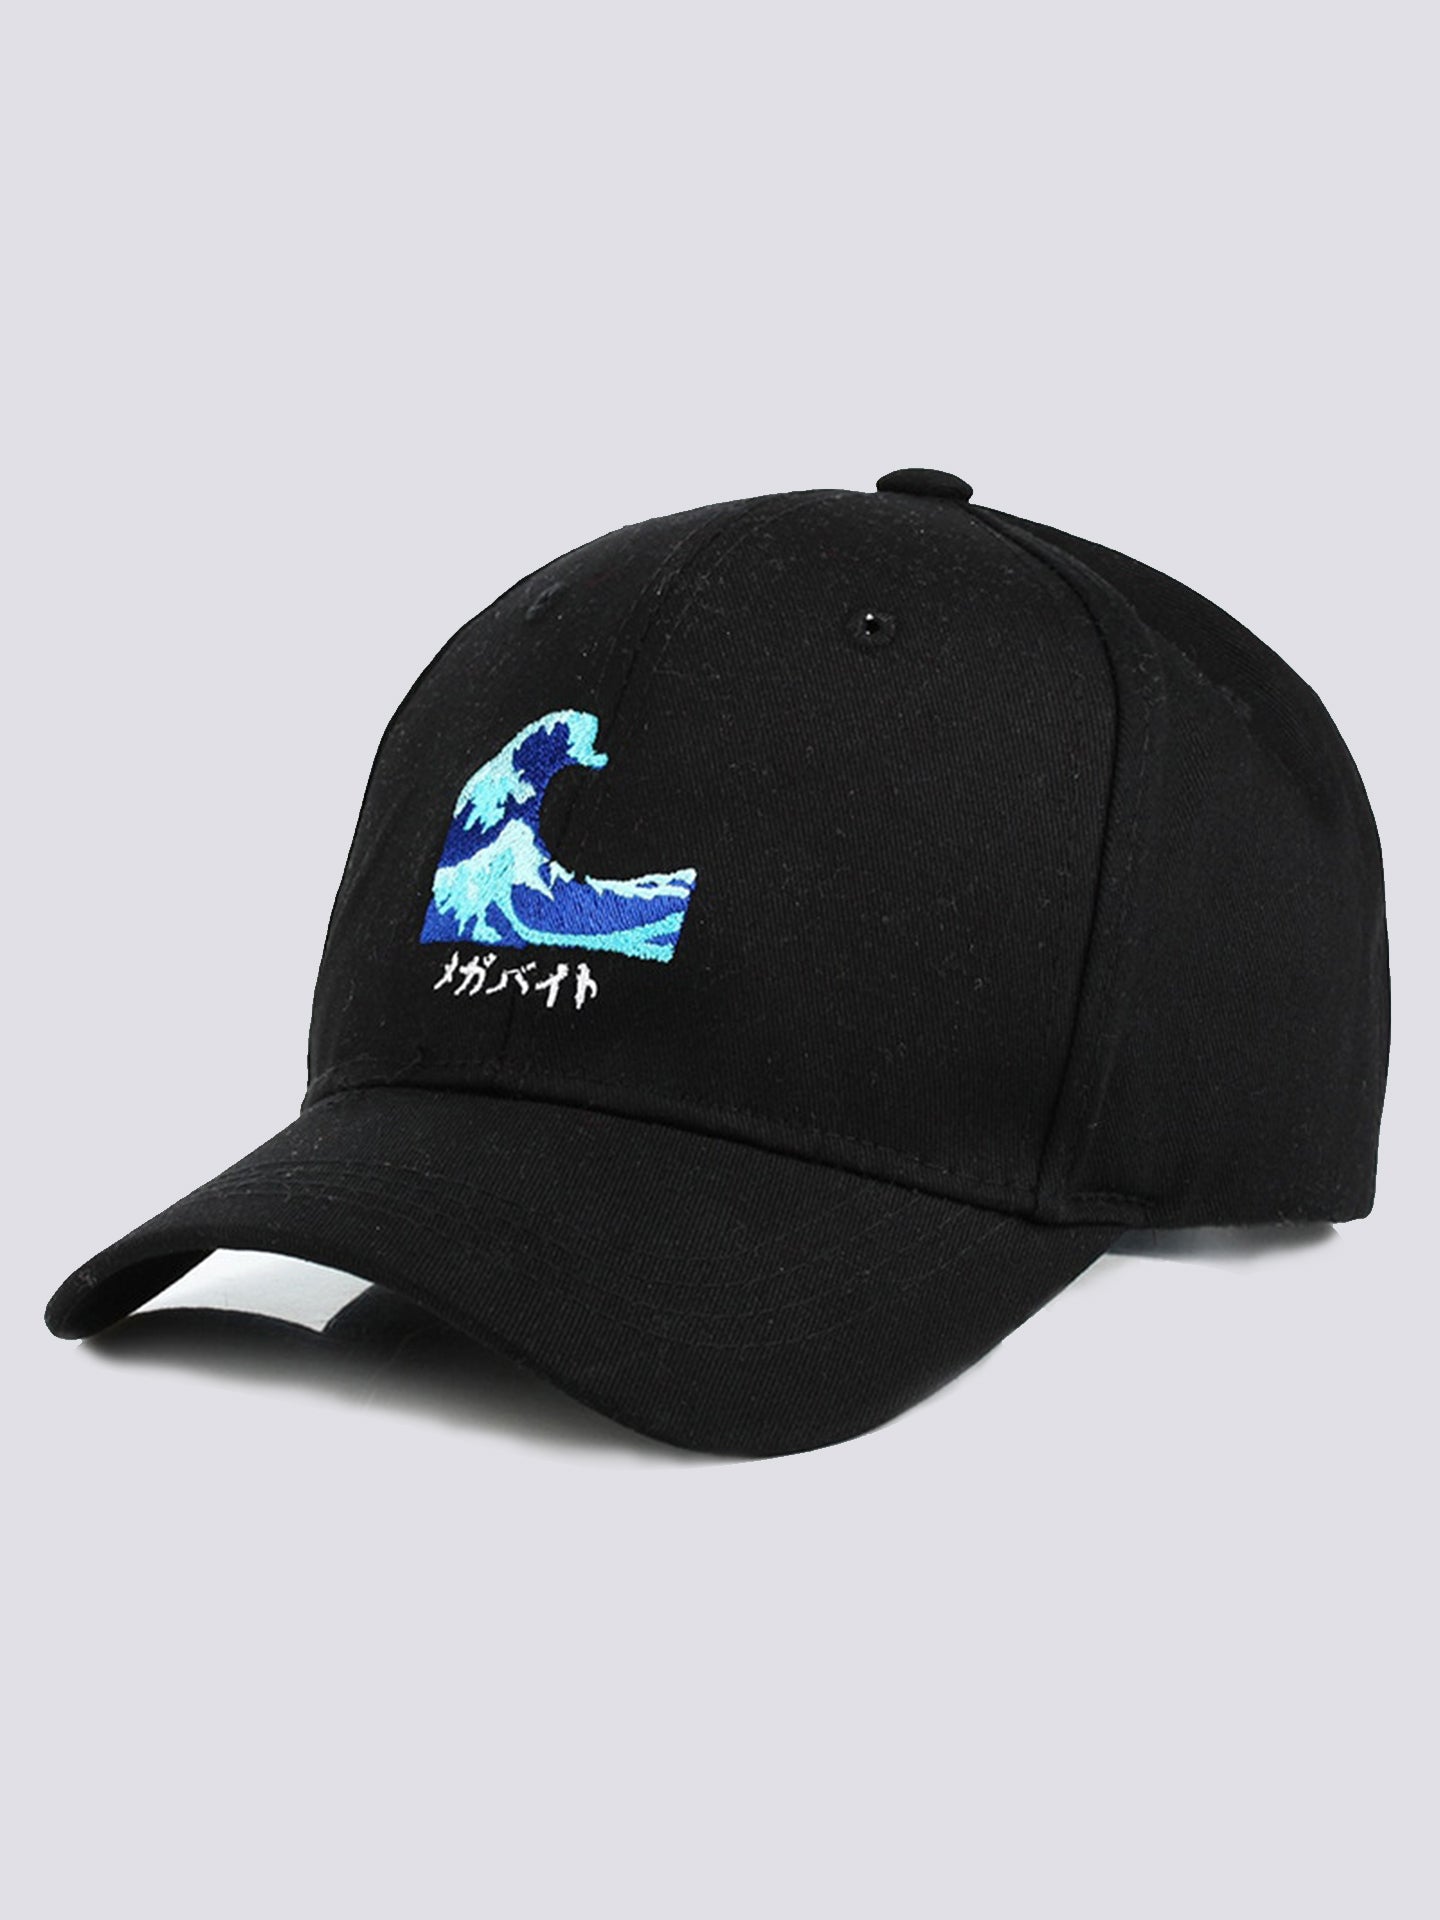 Kanagawa Wave Cap - Black